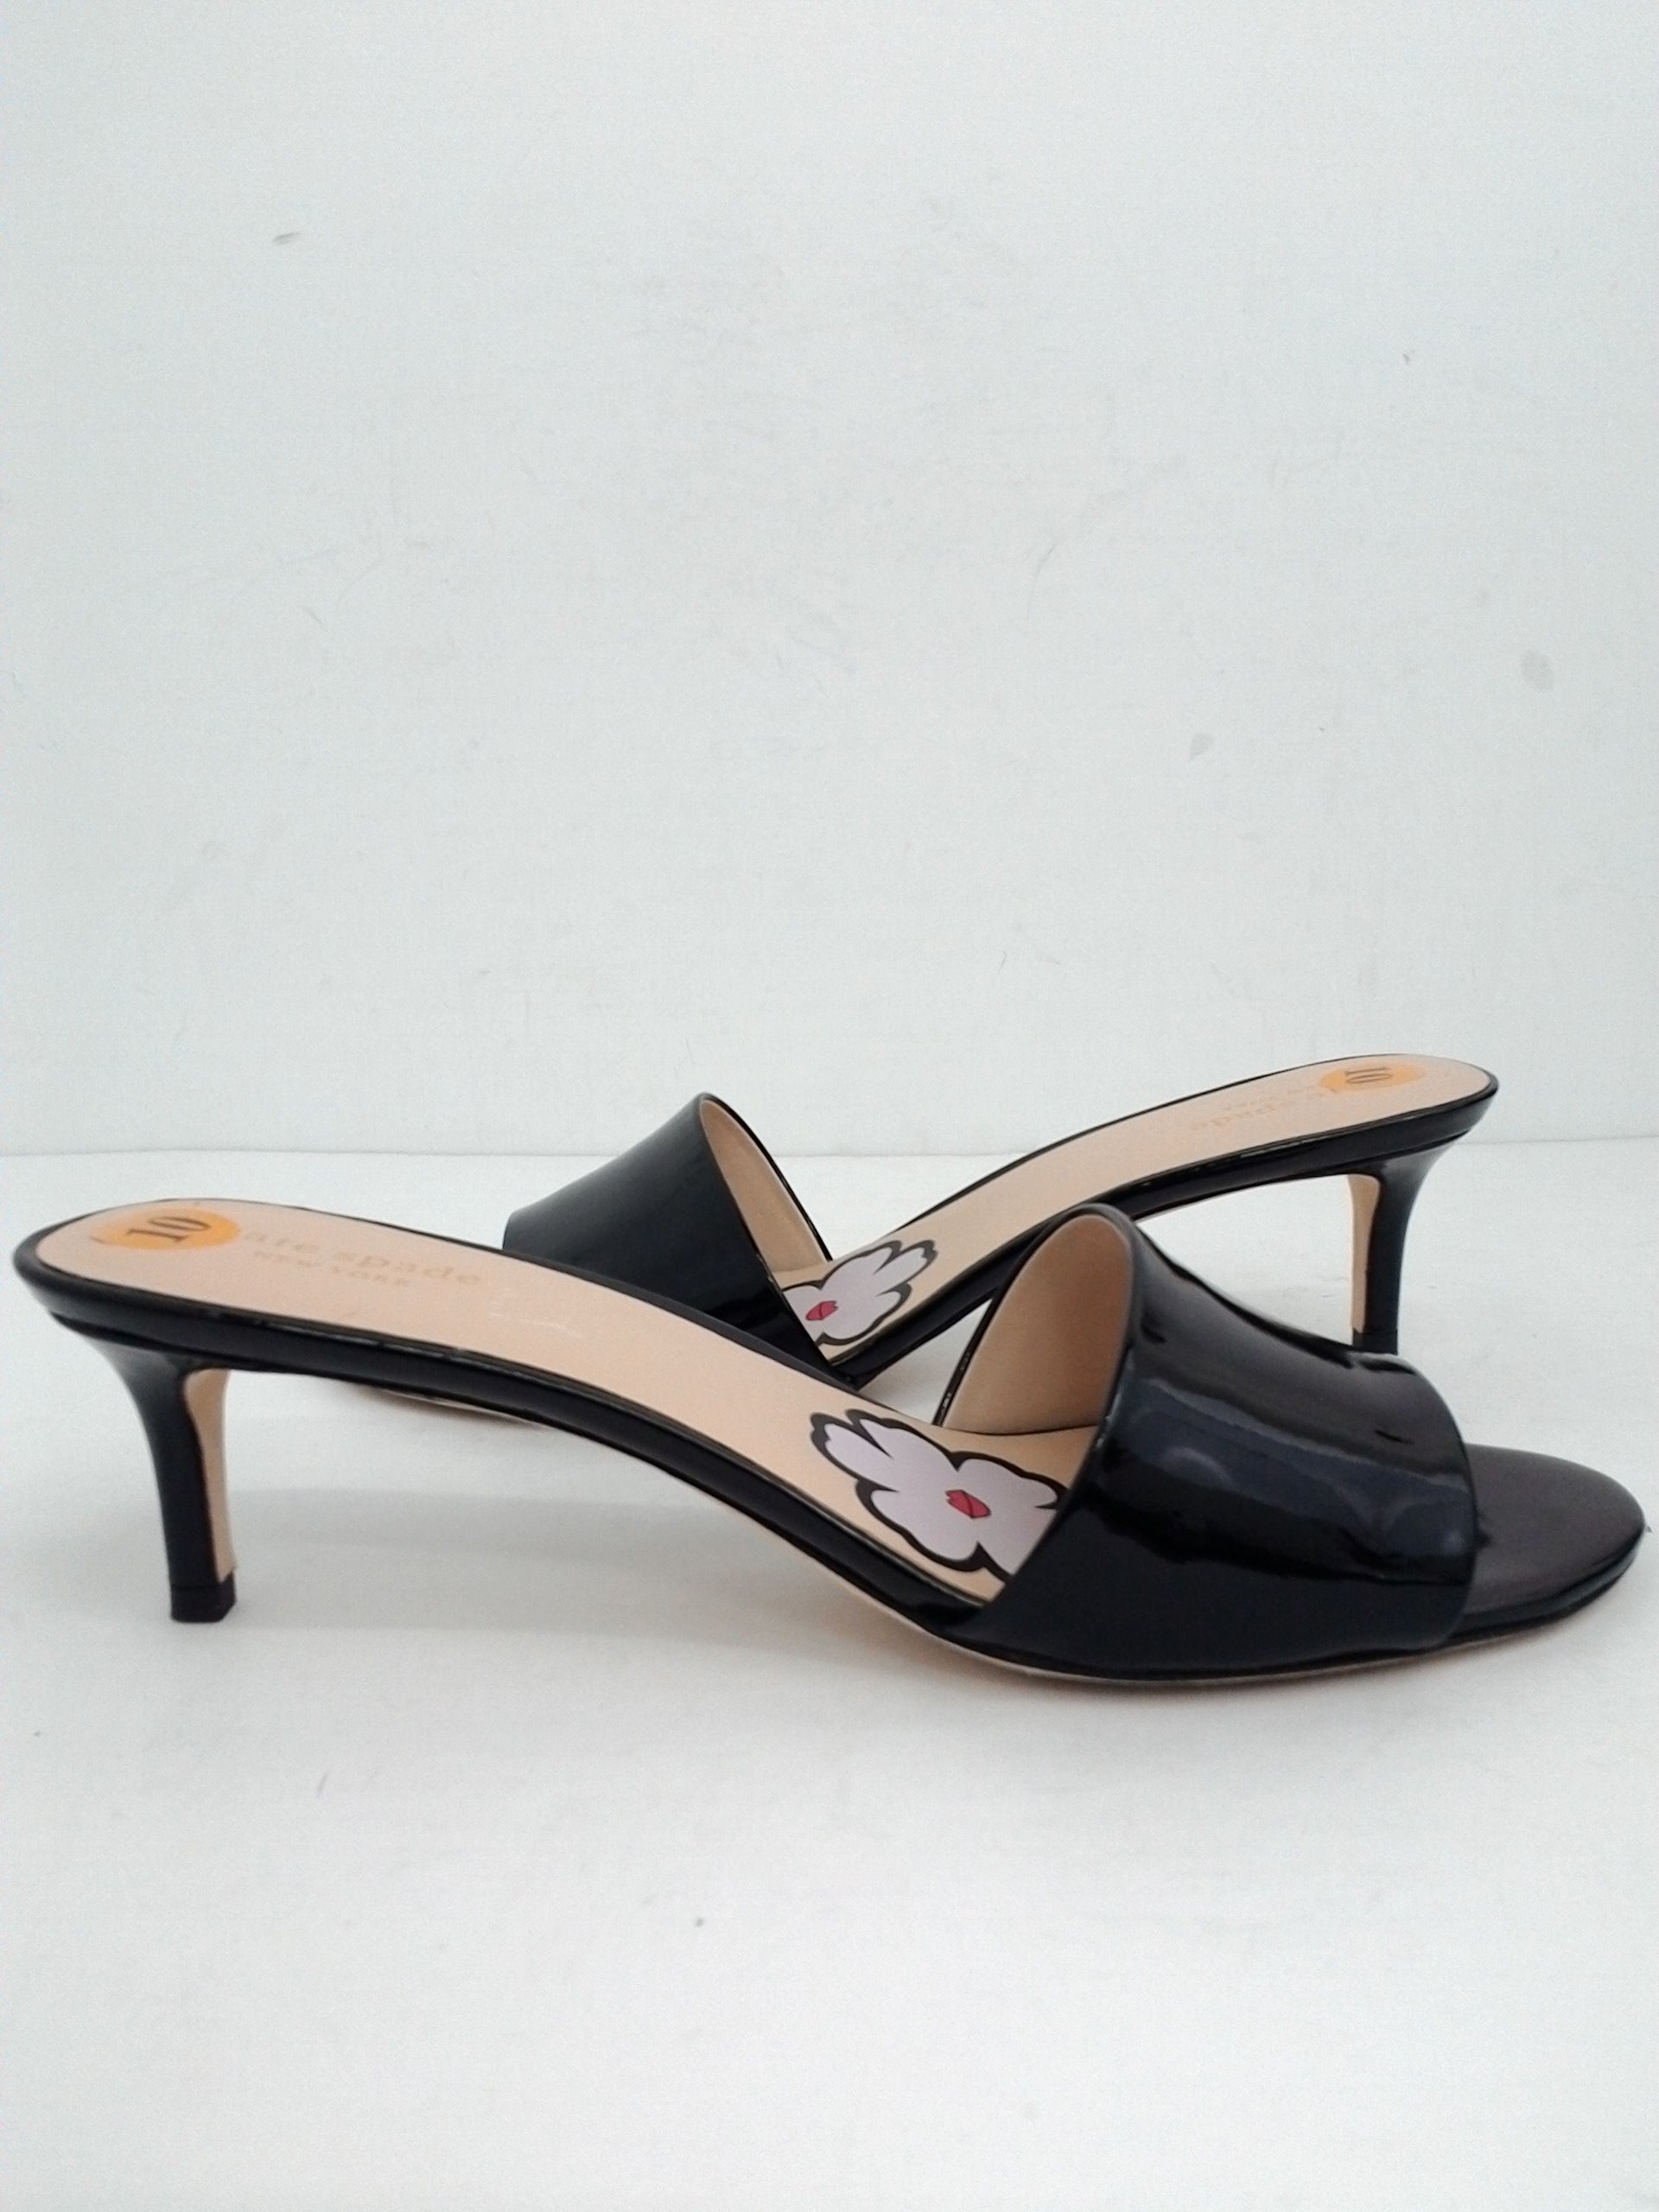 kate Spade New York Women's Slide Black Sandal Size 10 M - Prime Shoes ...